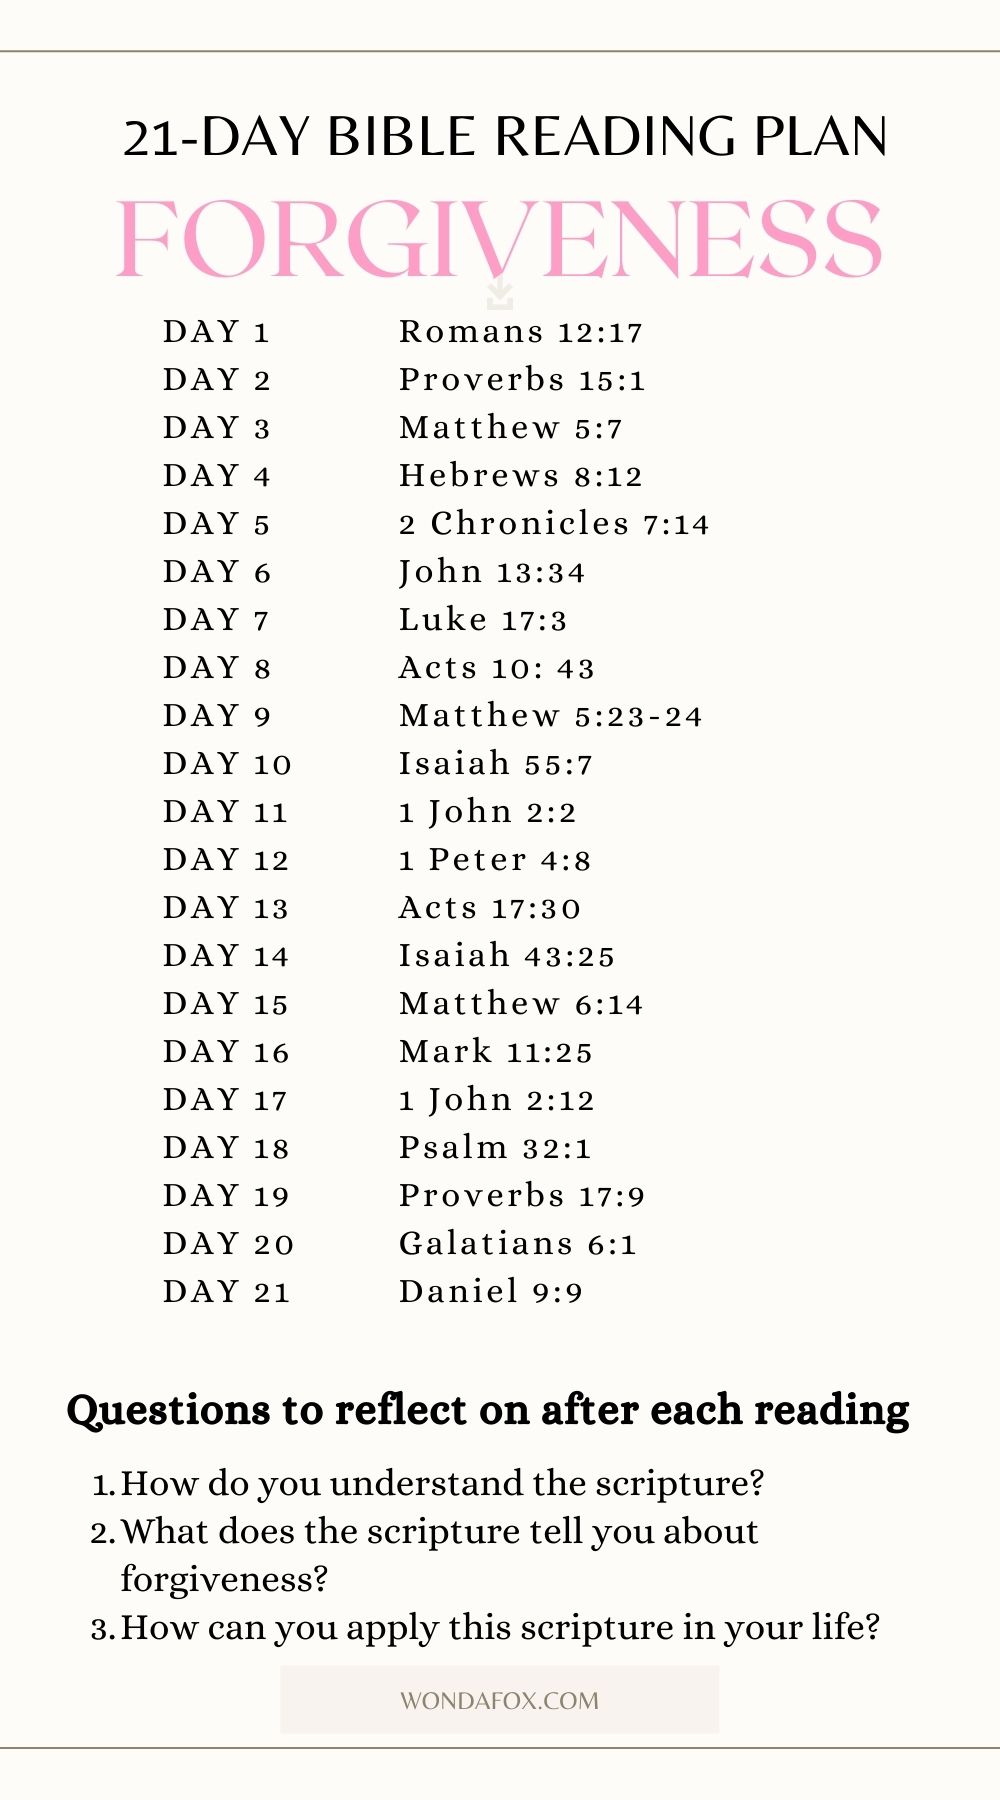 21-day forgiveness bible reading plan